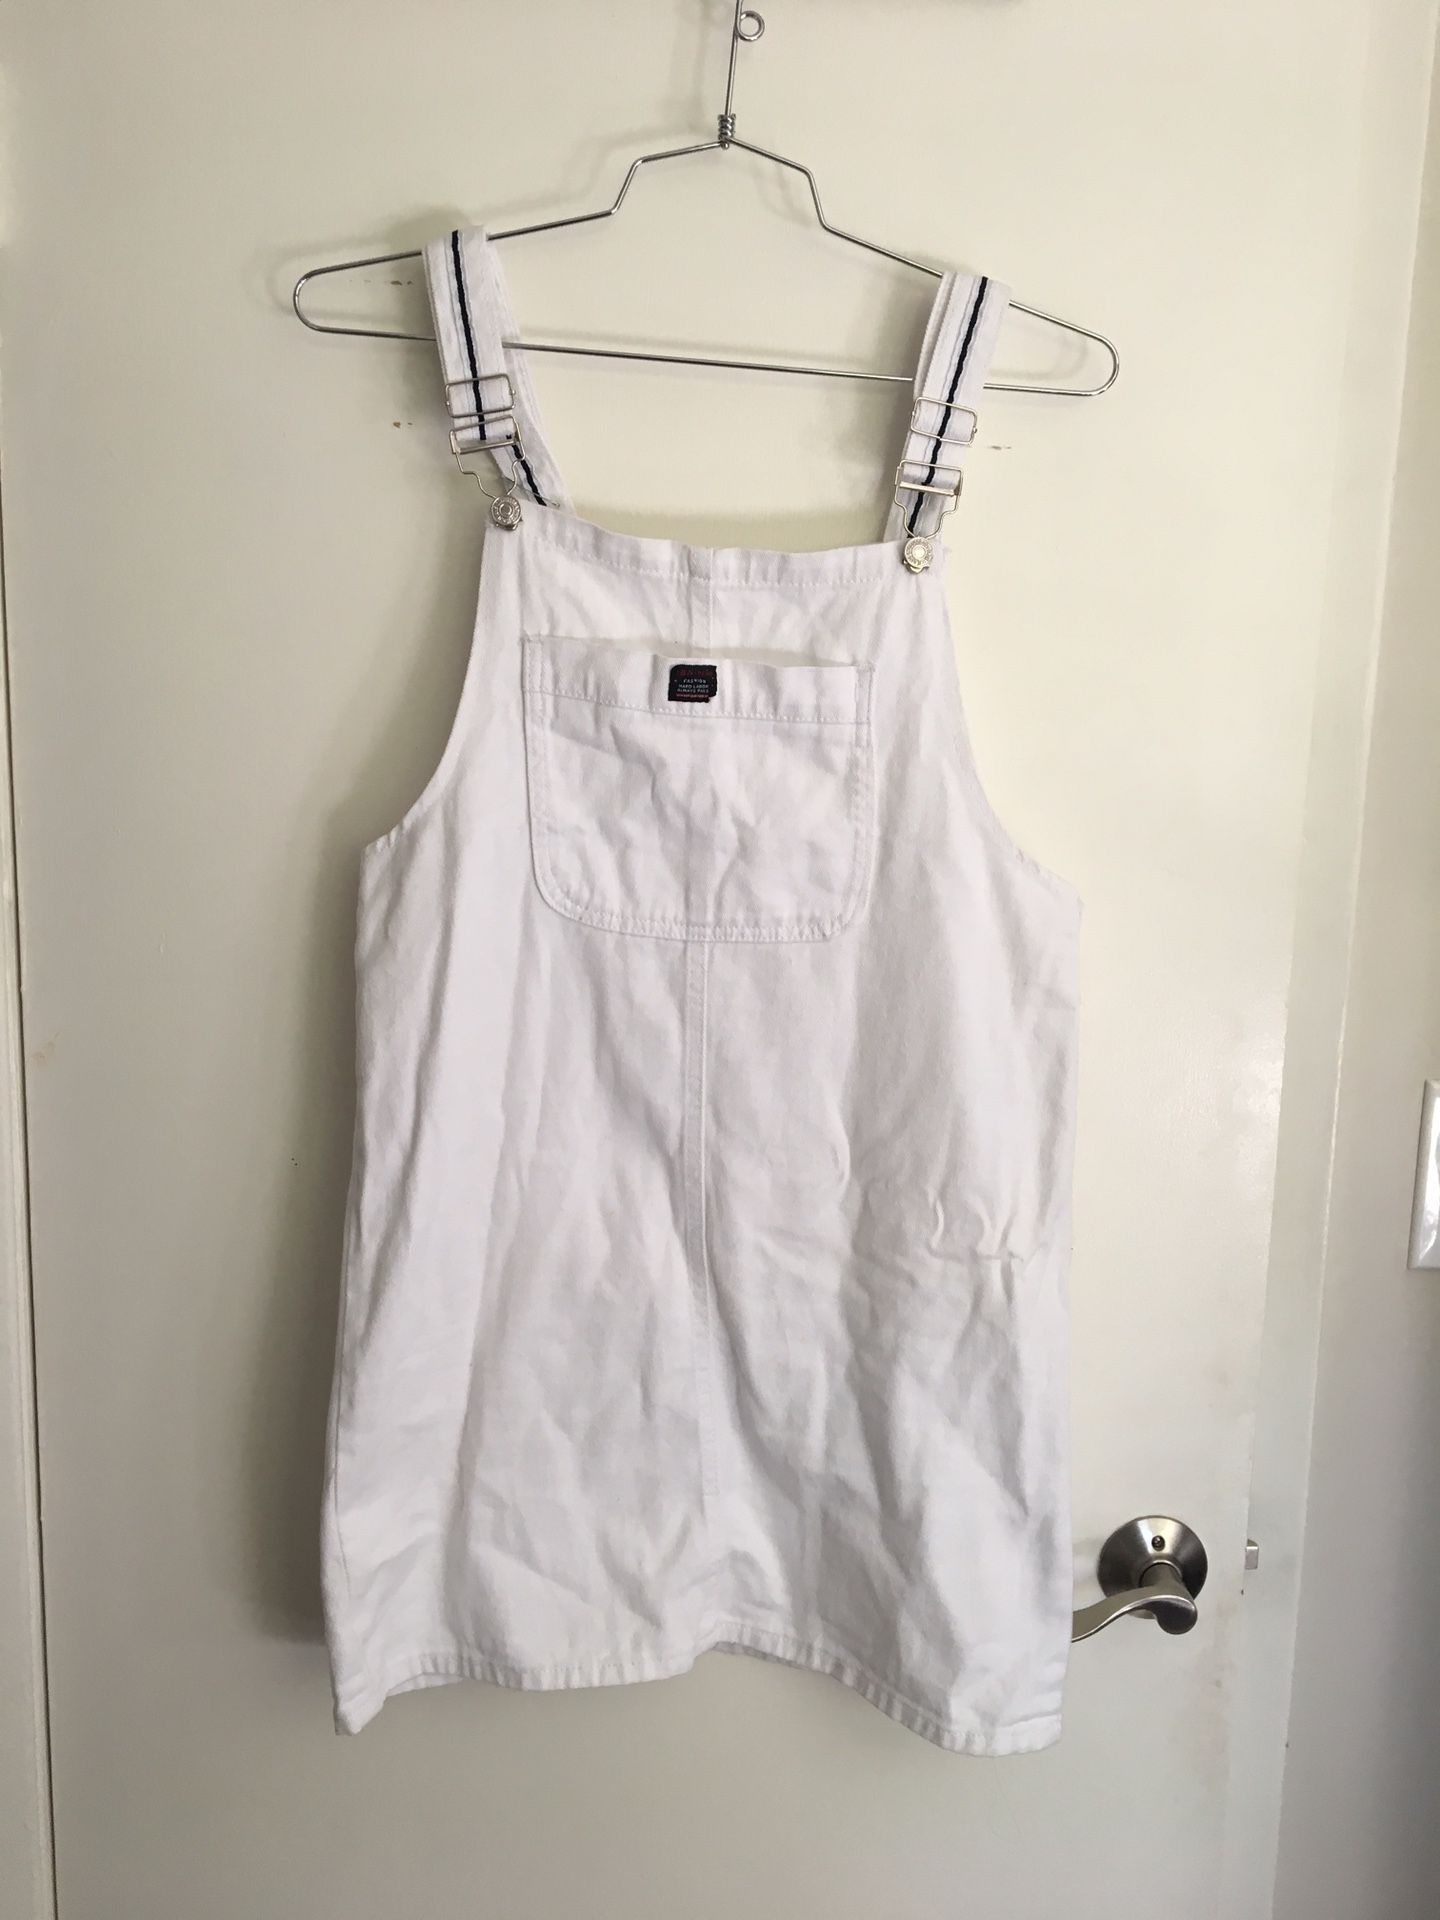 White overall dress, size medium